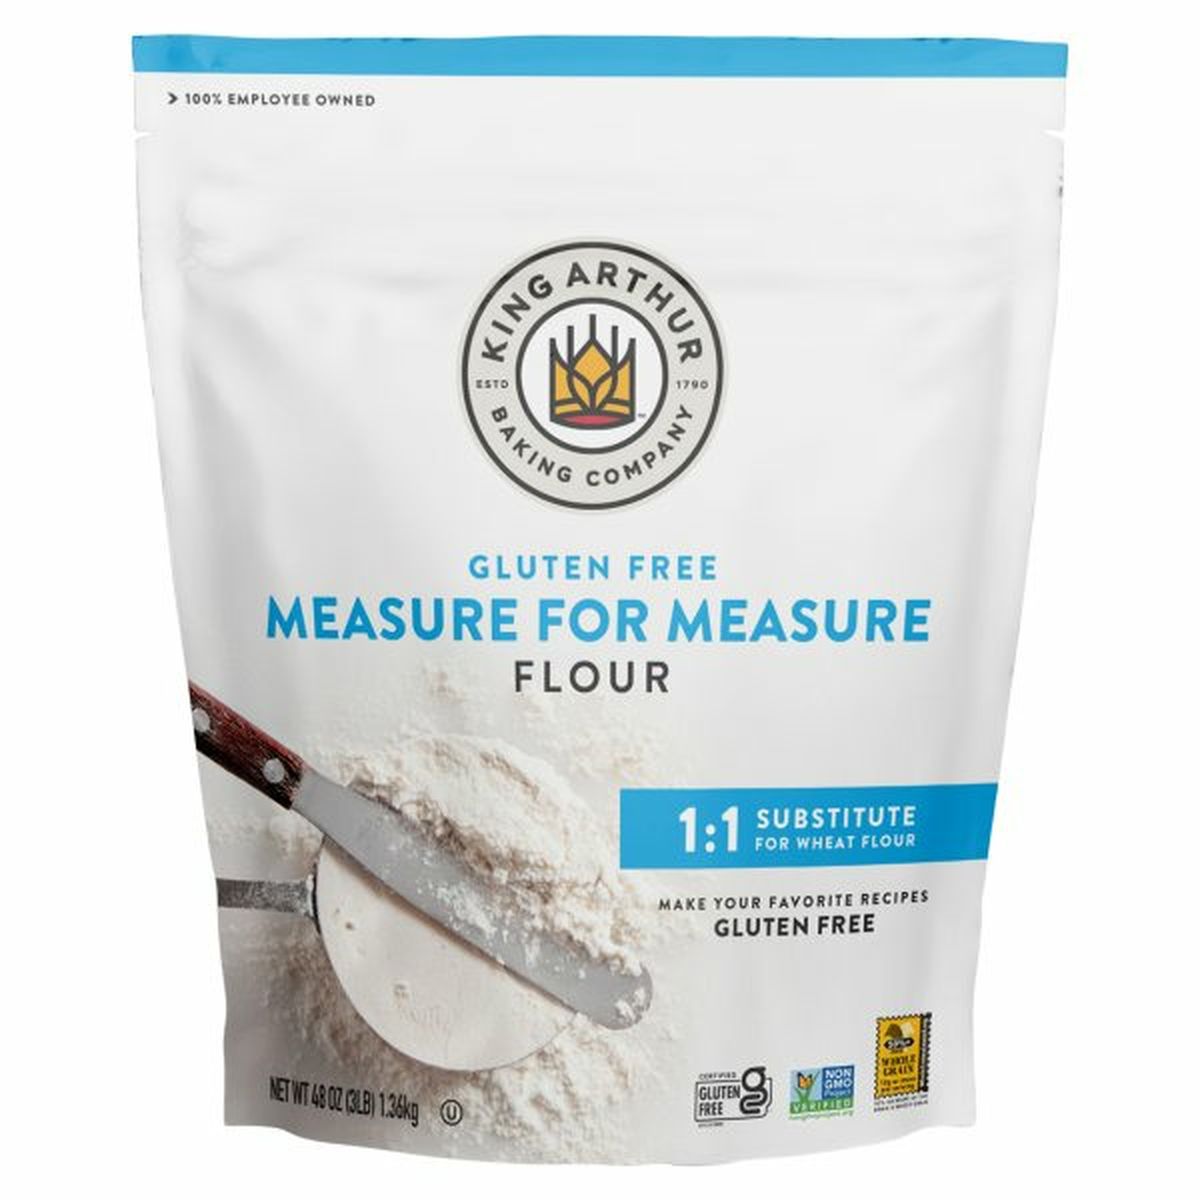 Calories in King Arthur Baking Company Flour, Gluten Free, Measure for Measure